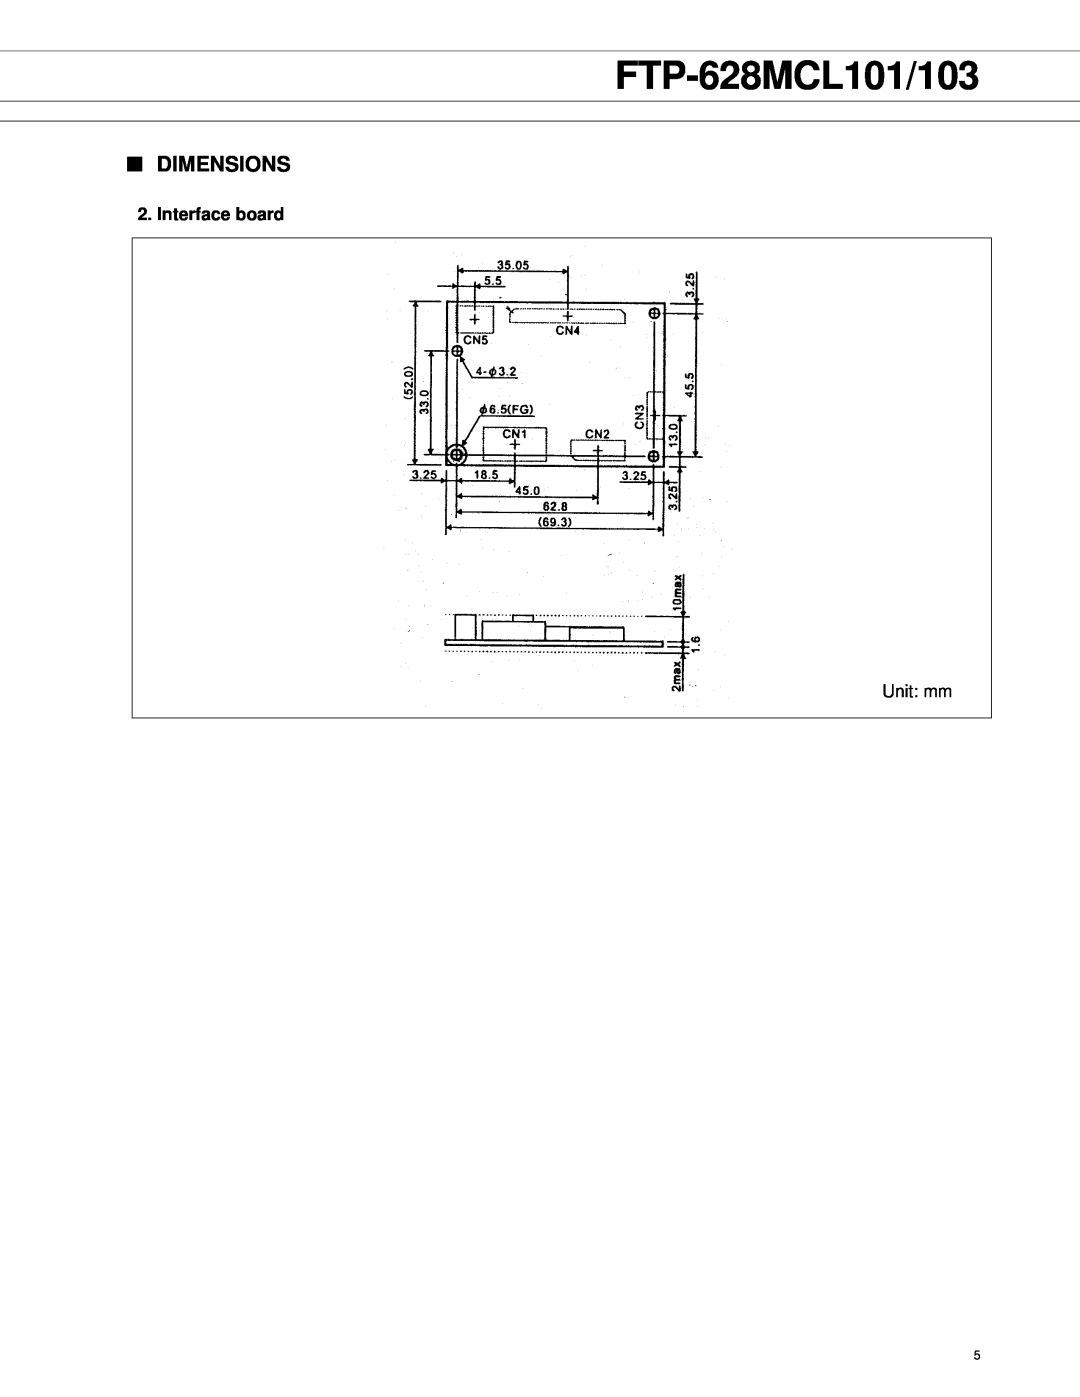 Fujitsu FTP-628MCL103 manual Interface board, FTP-628MCL101/103, Dimensions 